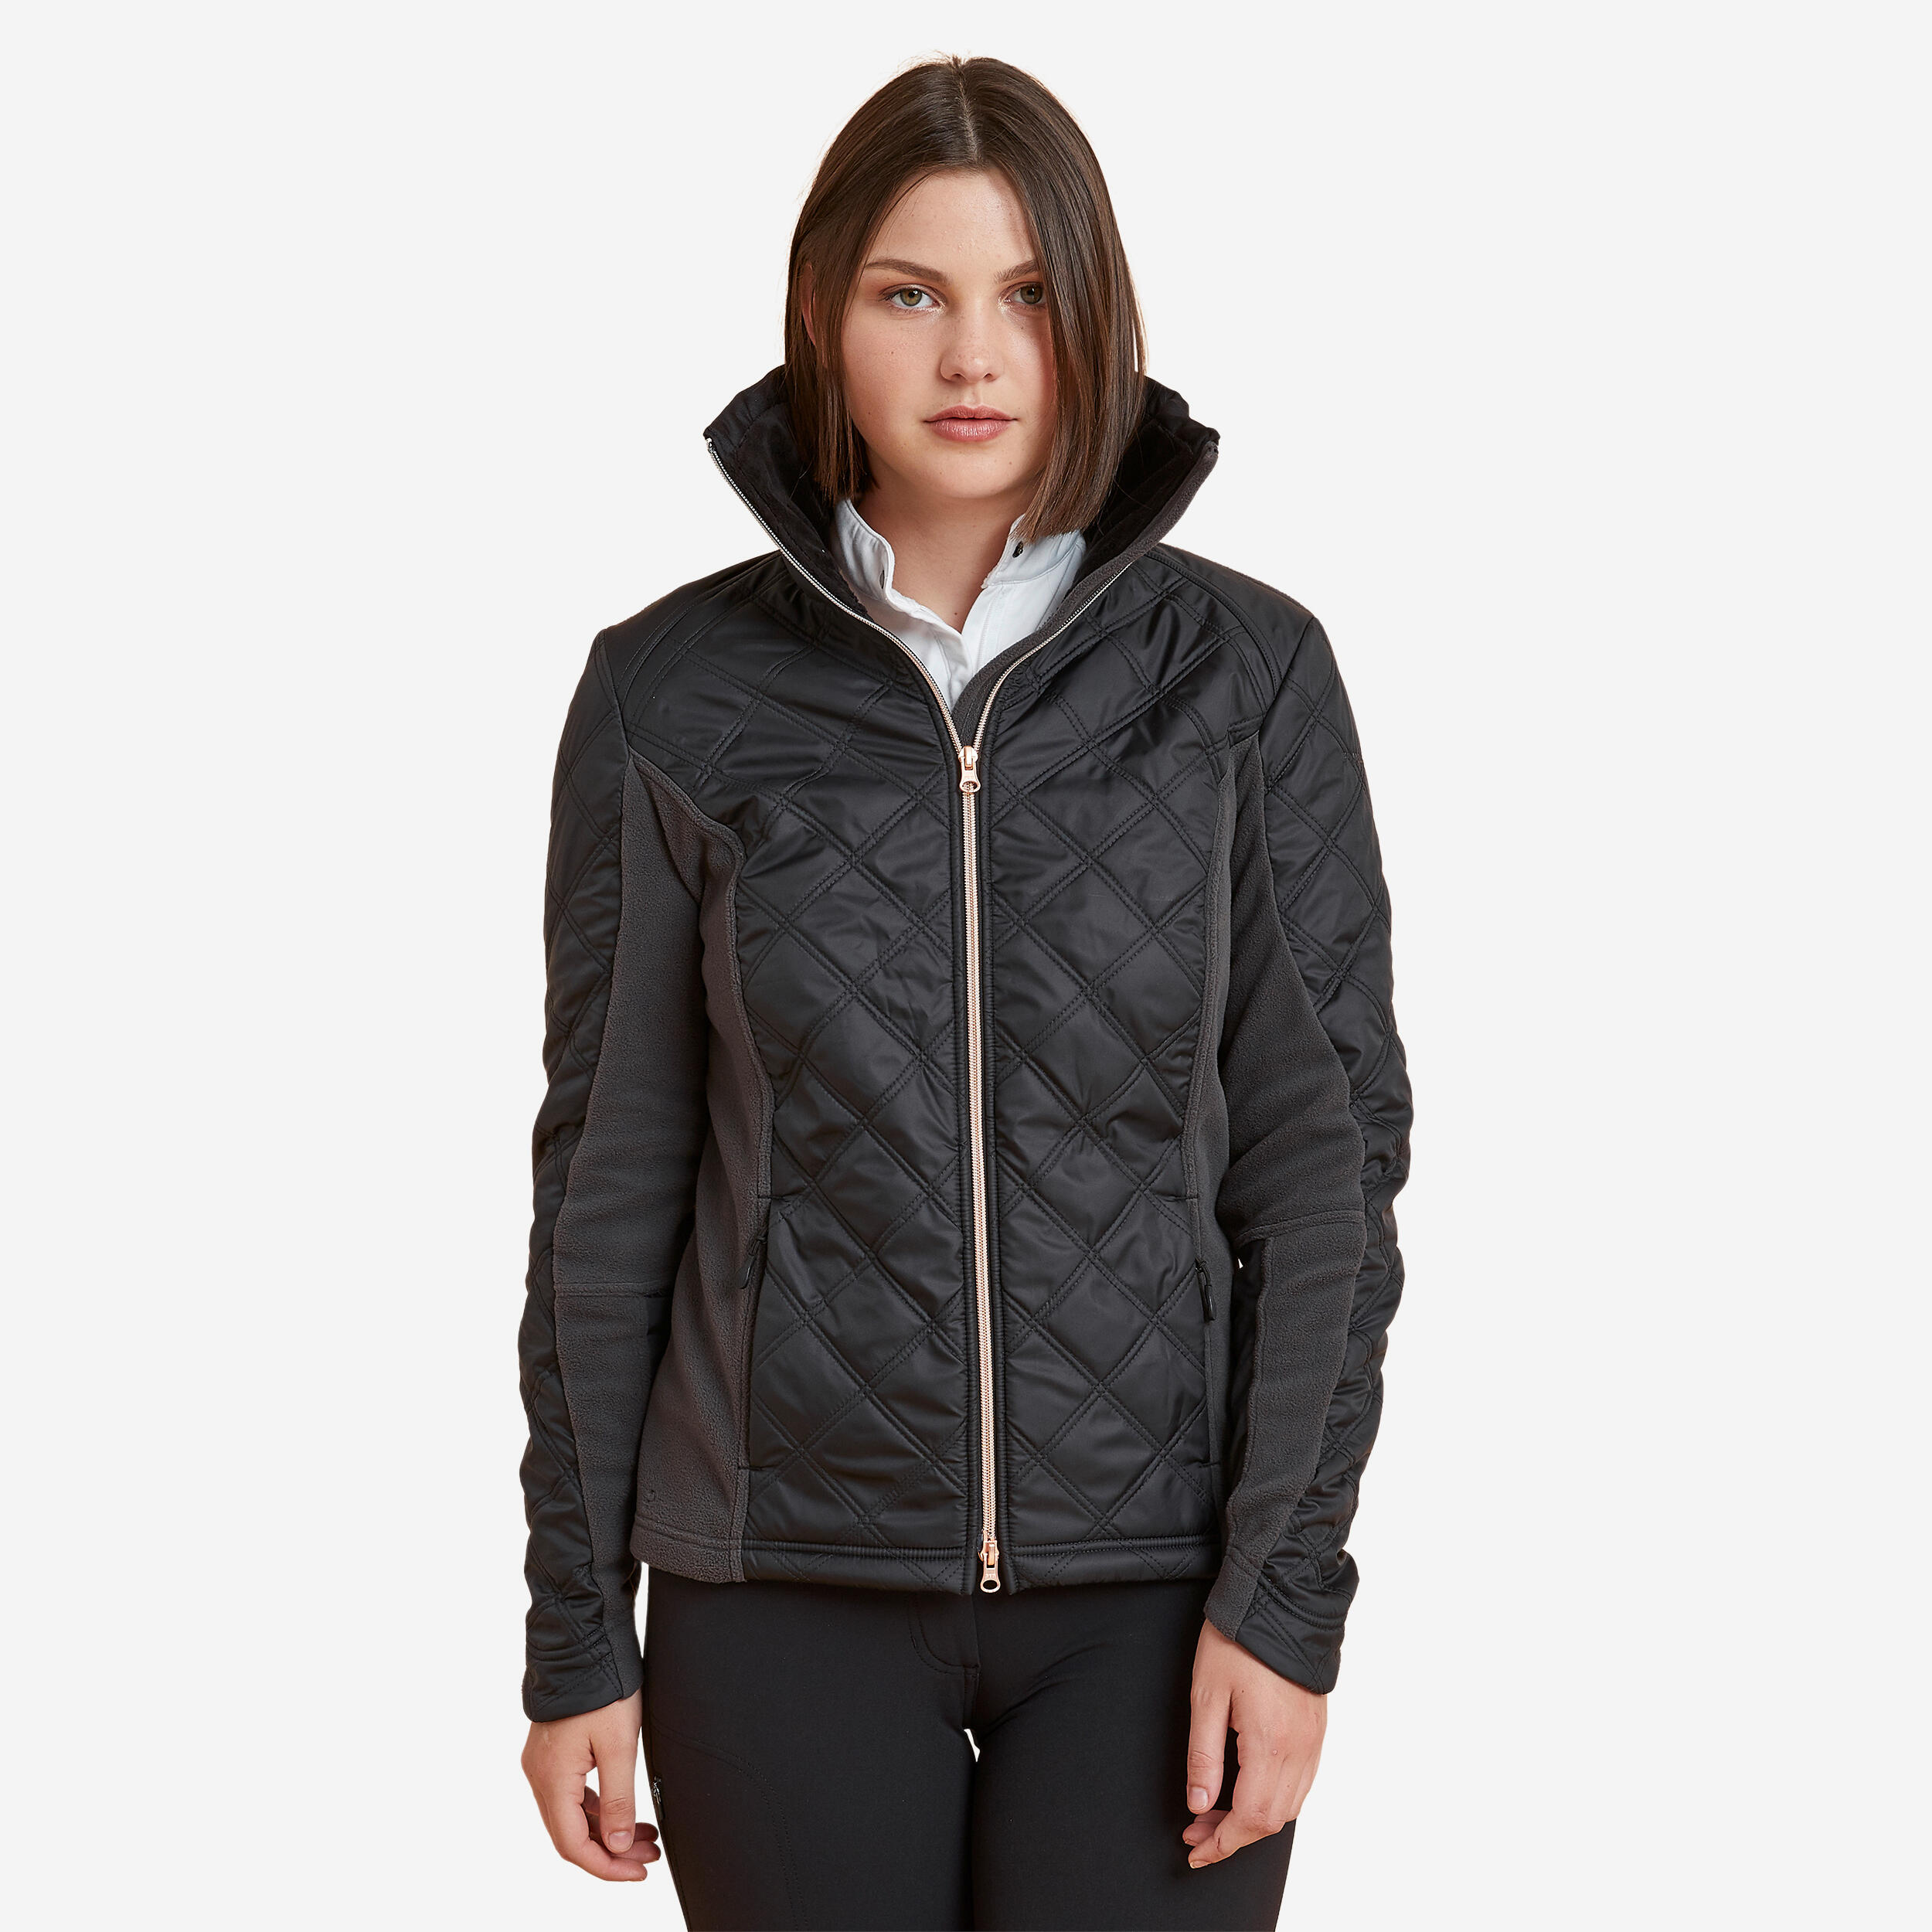 Women's Fleece Jacket - SH 900 Black - black - Quechua - Decathlon